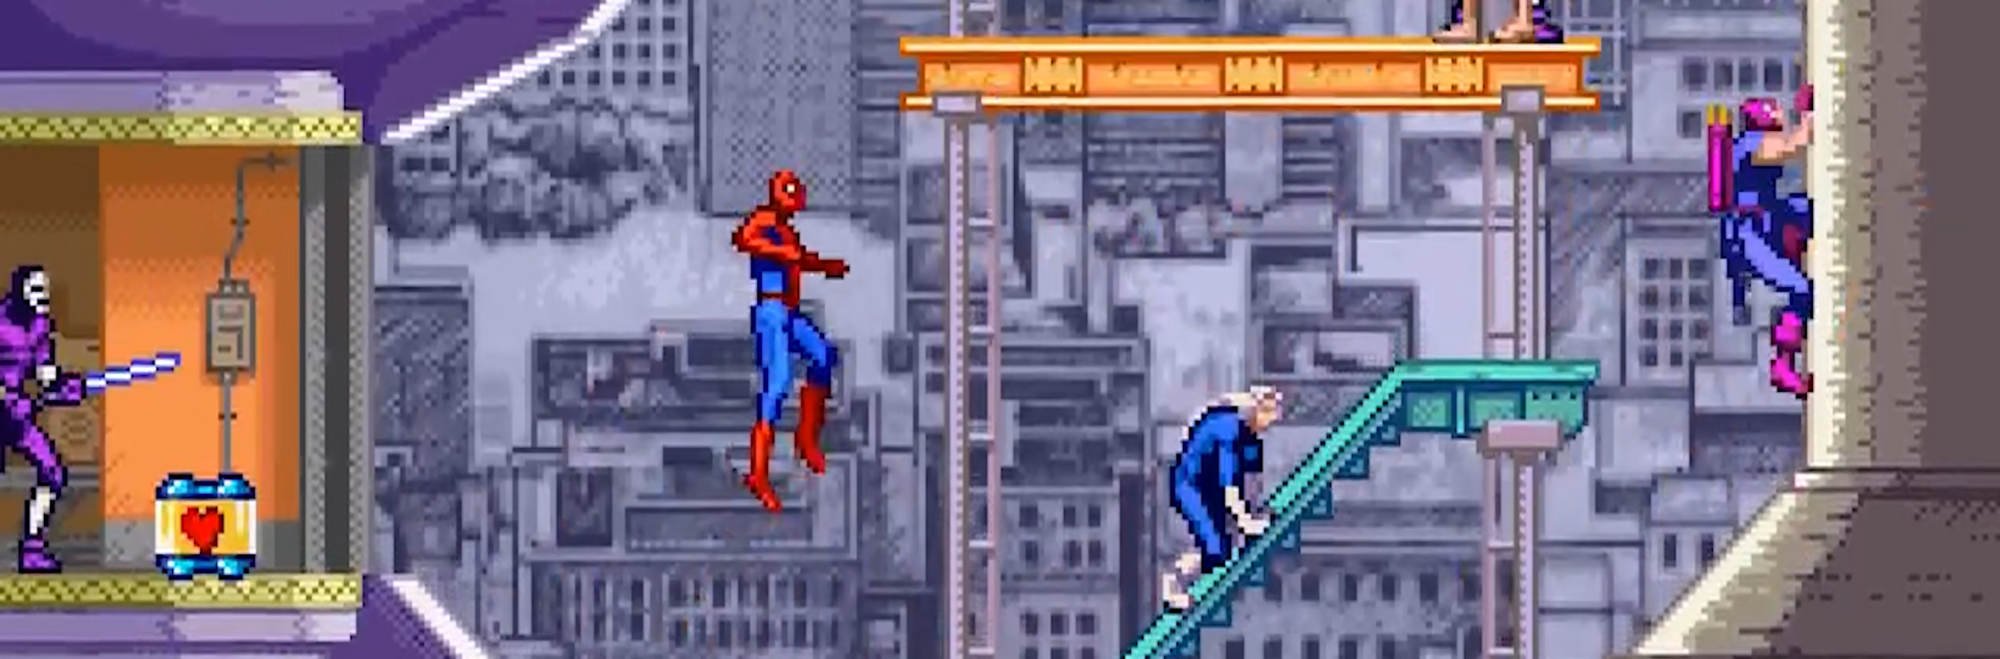 Spider-Man: The Video Game (Arcade) 3